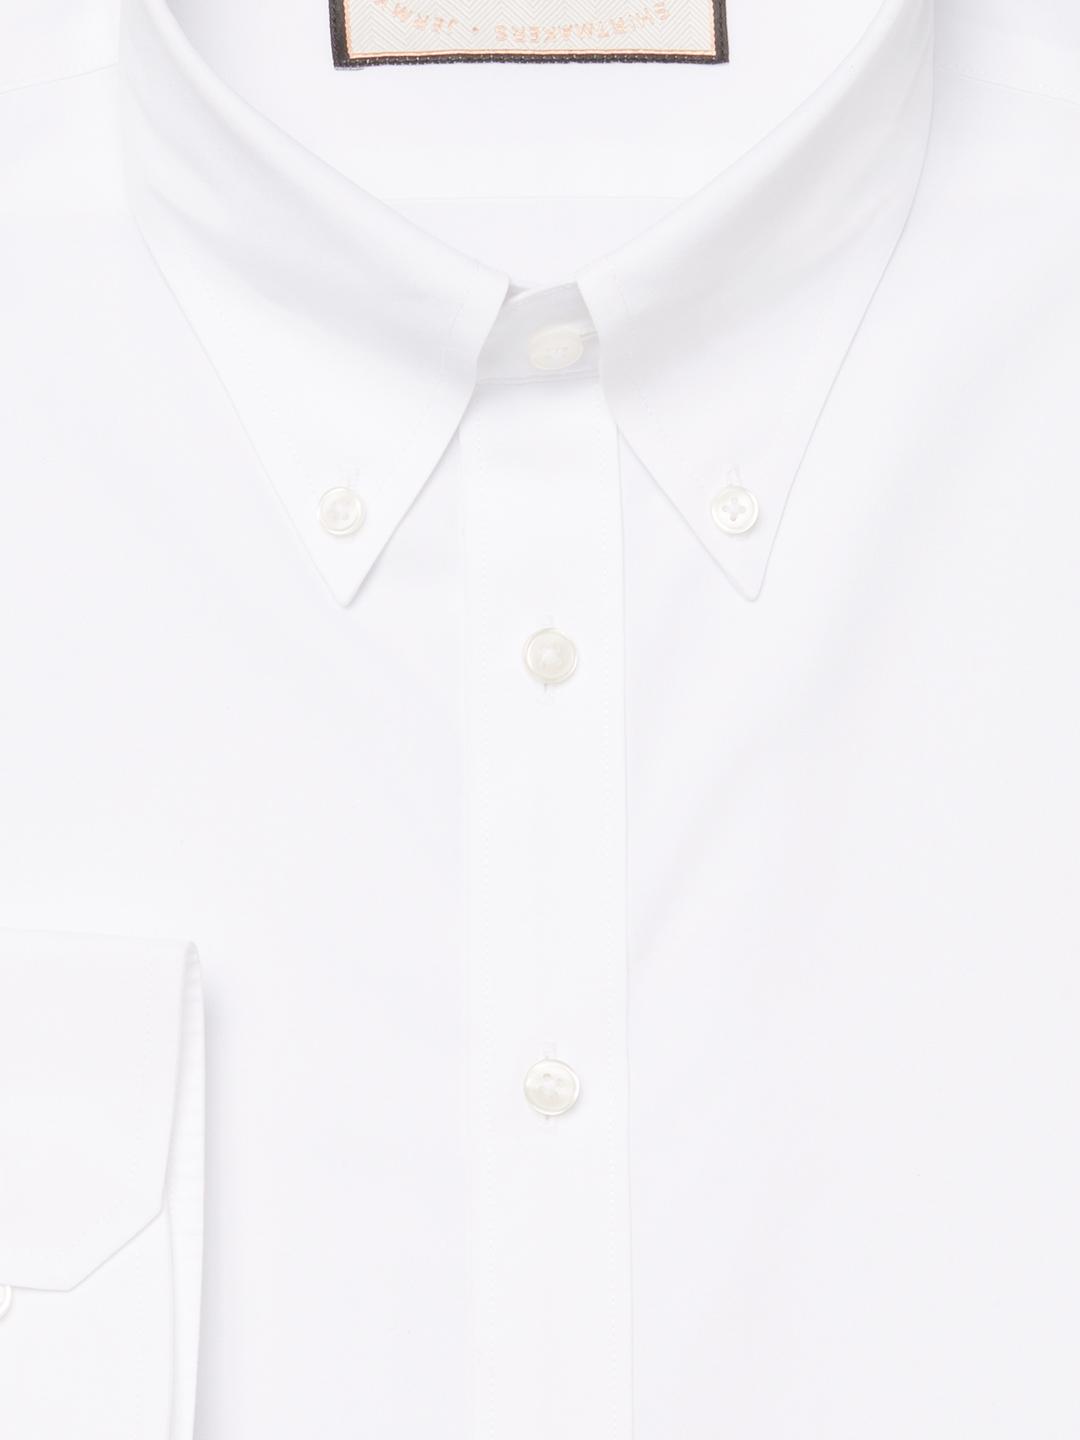 Thomas Pink Traveller Button-down Collar Slim Fit Dress Shirt in